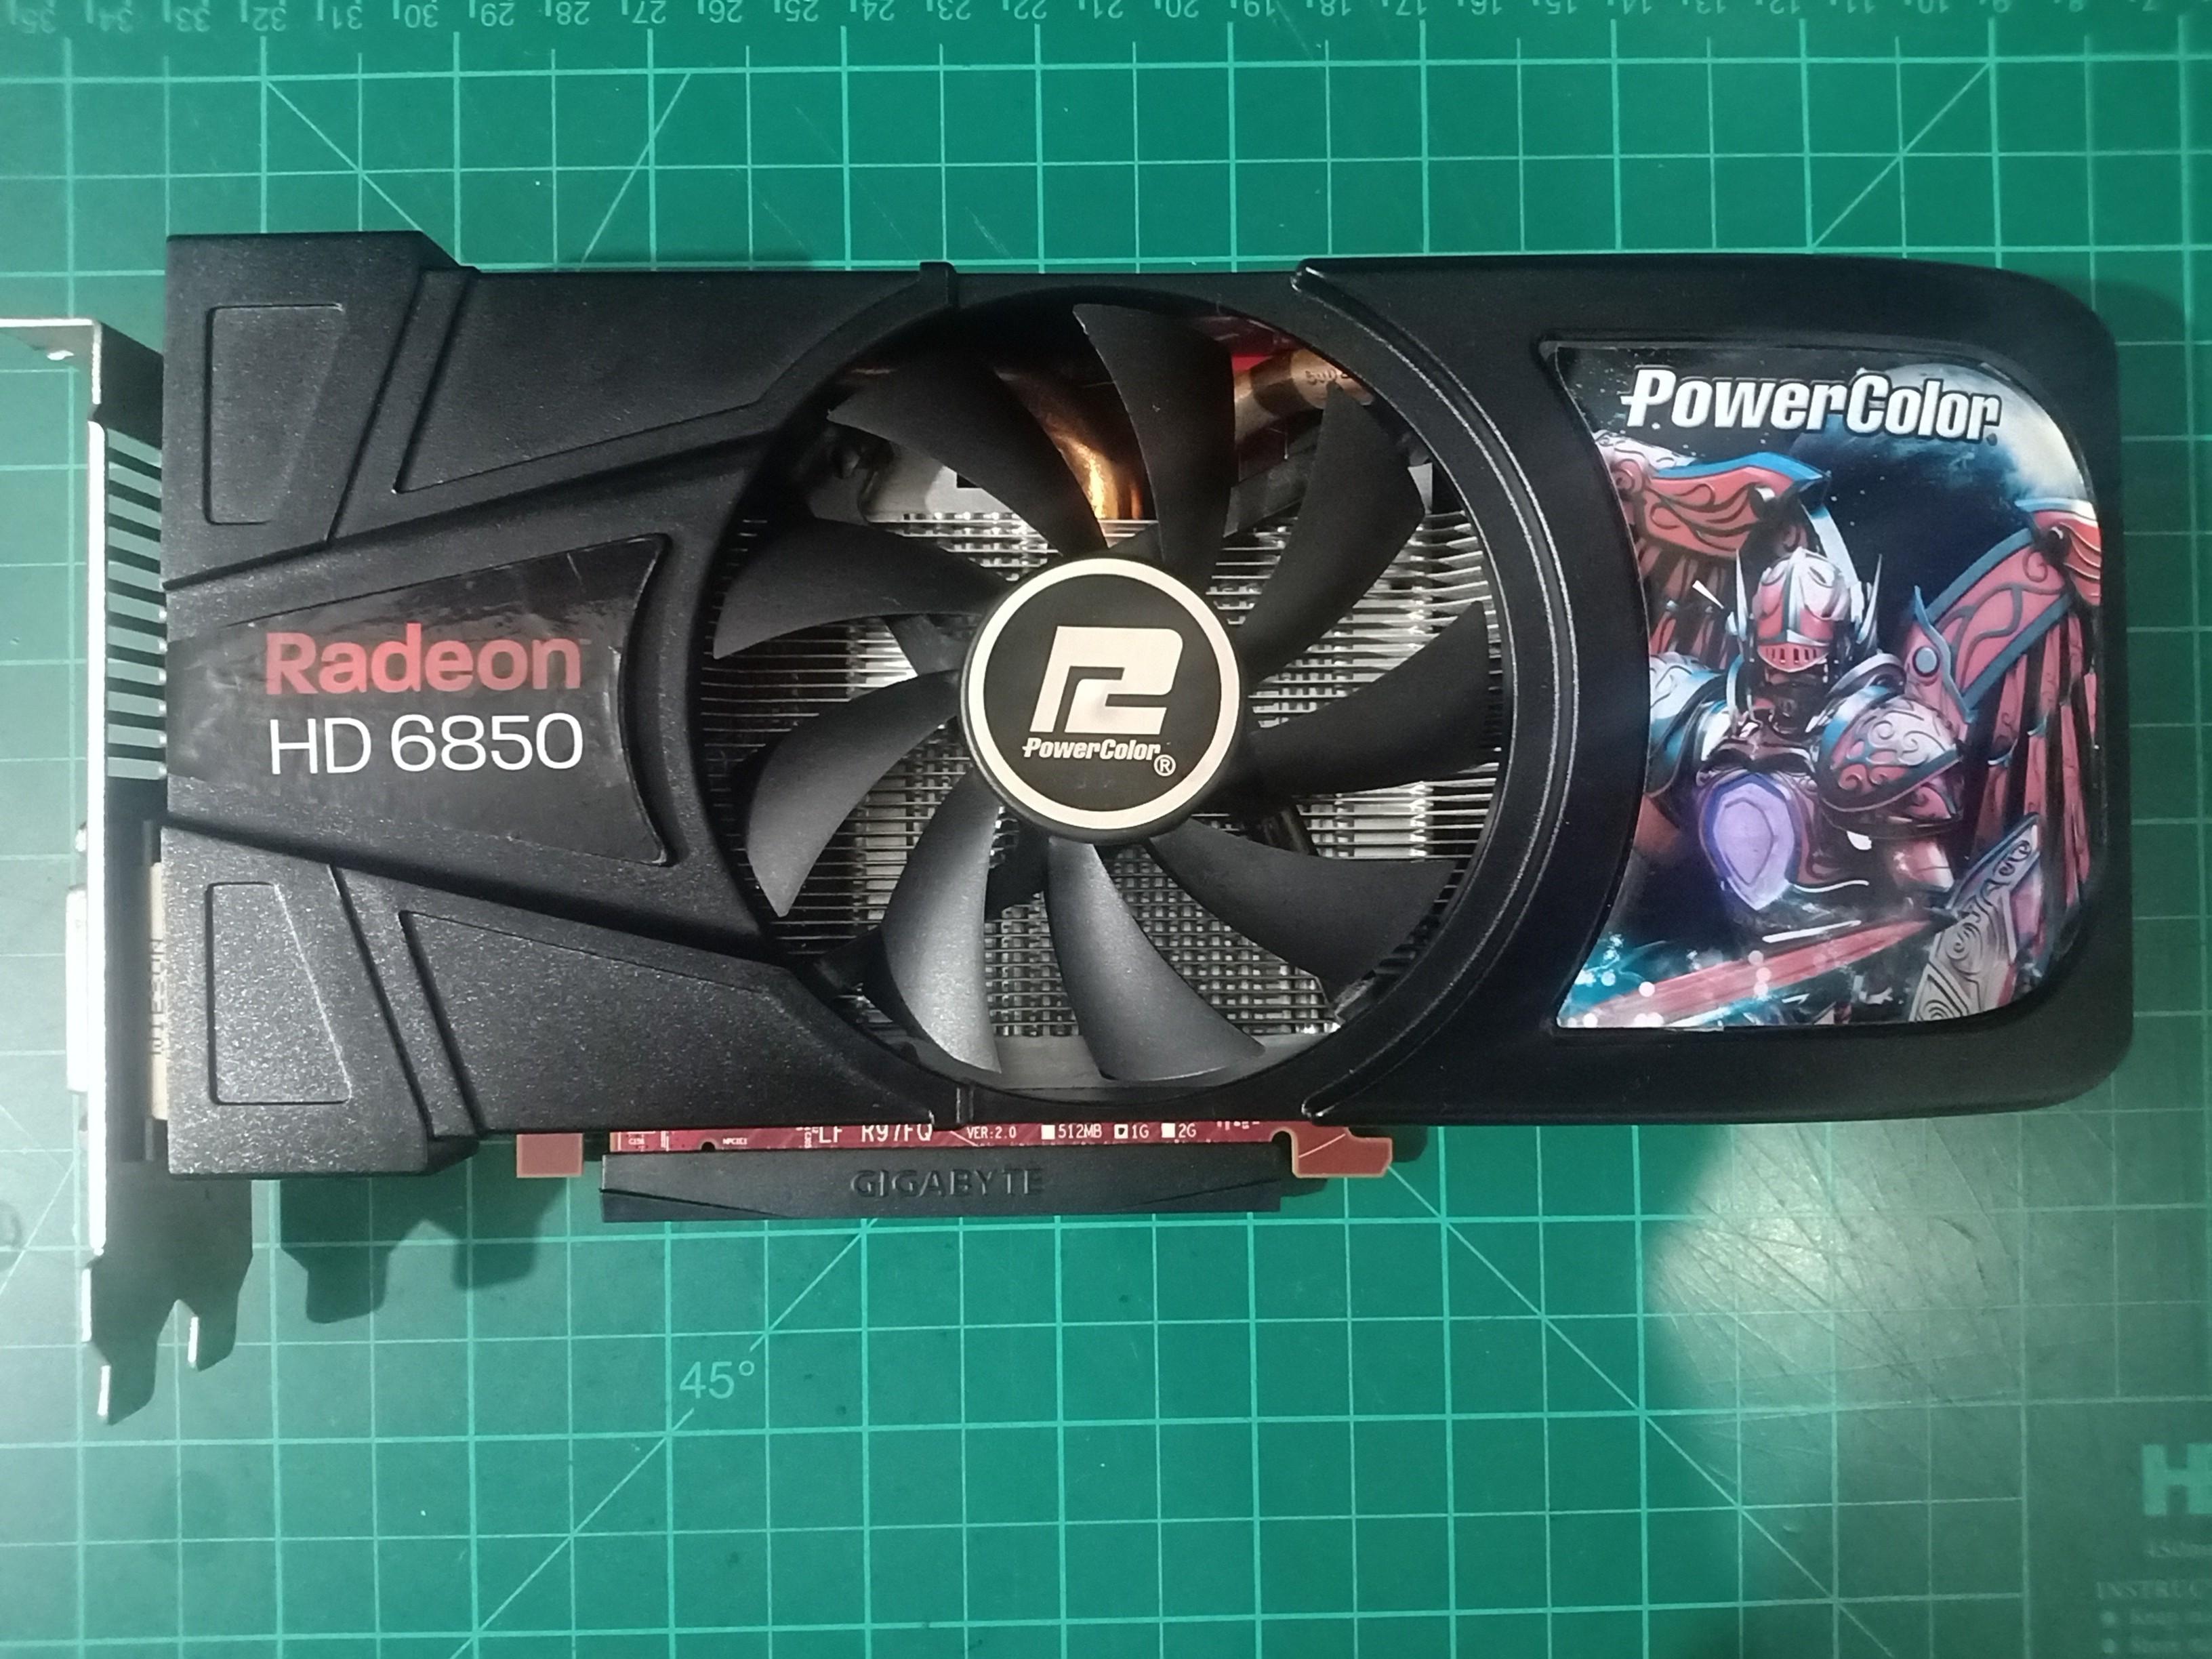 Radeon HD6850